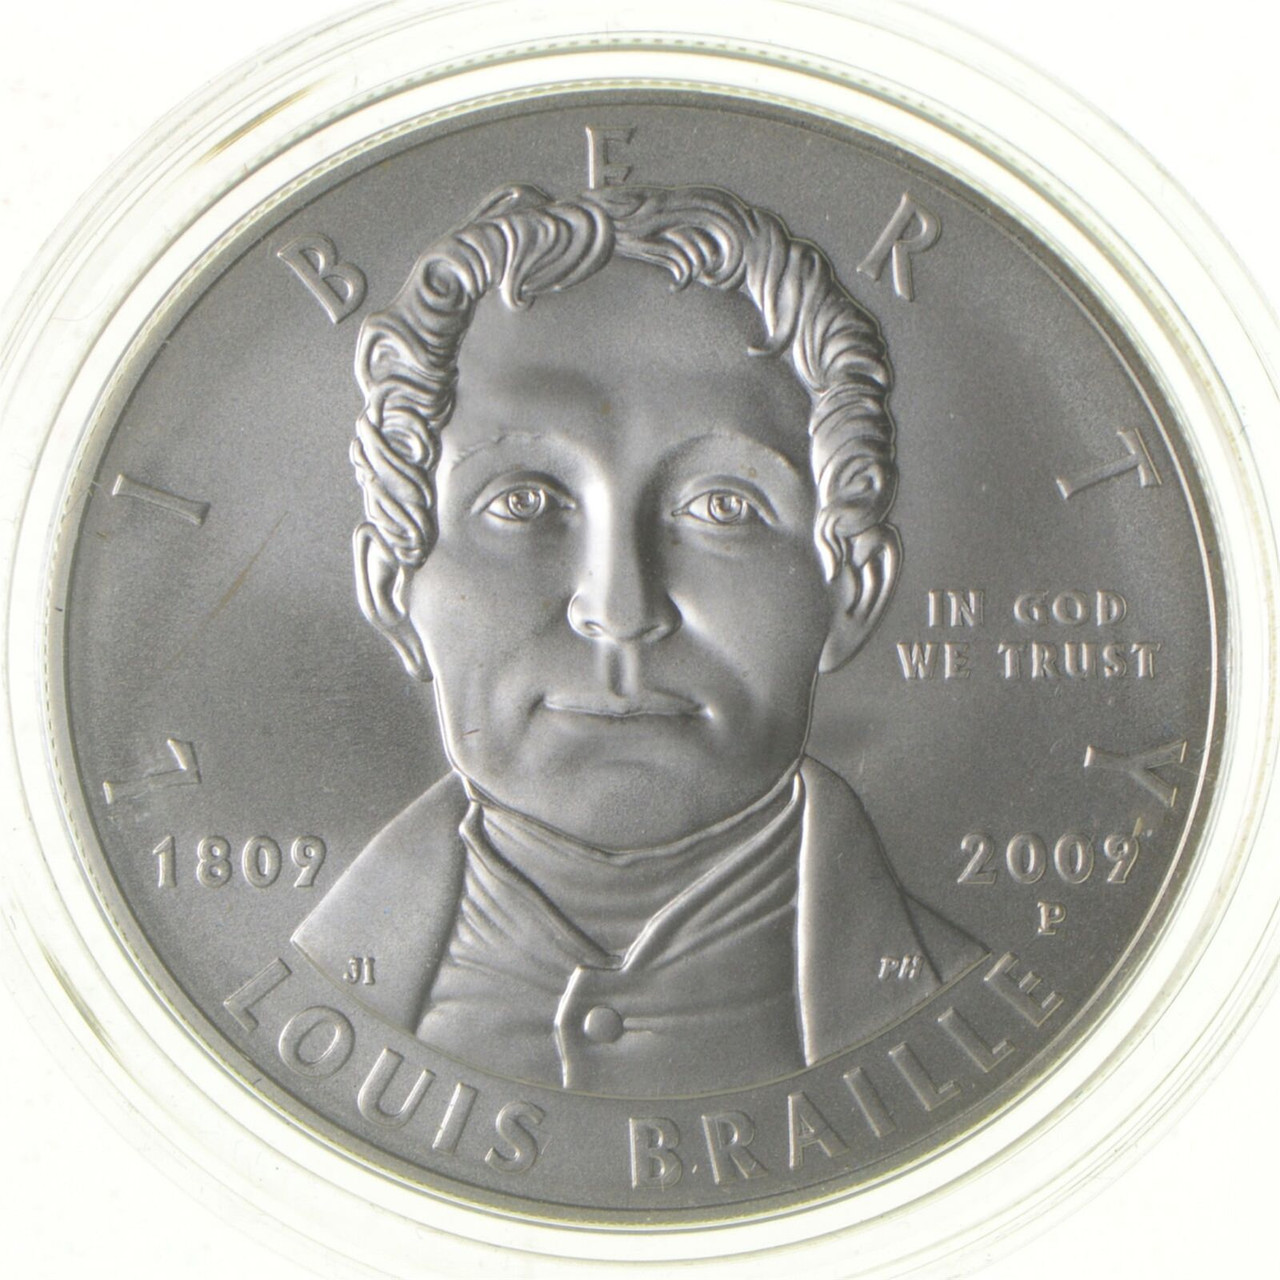 Unc 2009 Louis Braille - US Commemorative 90% Silver Dollar